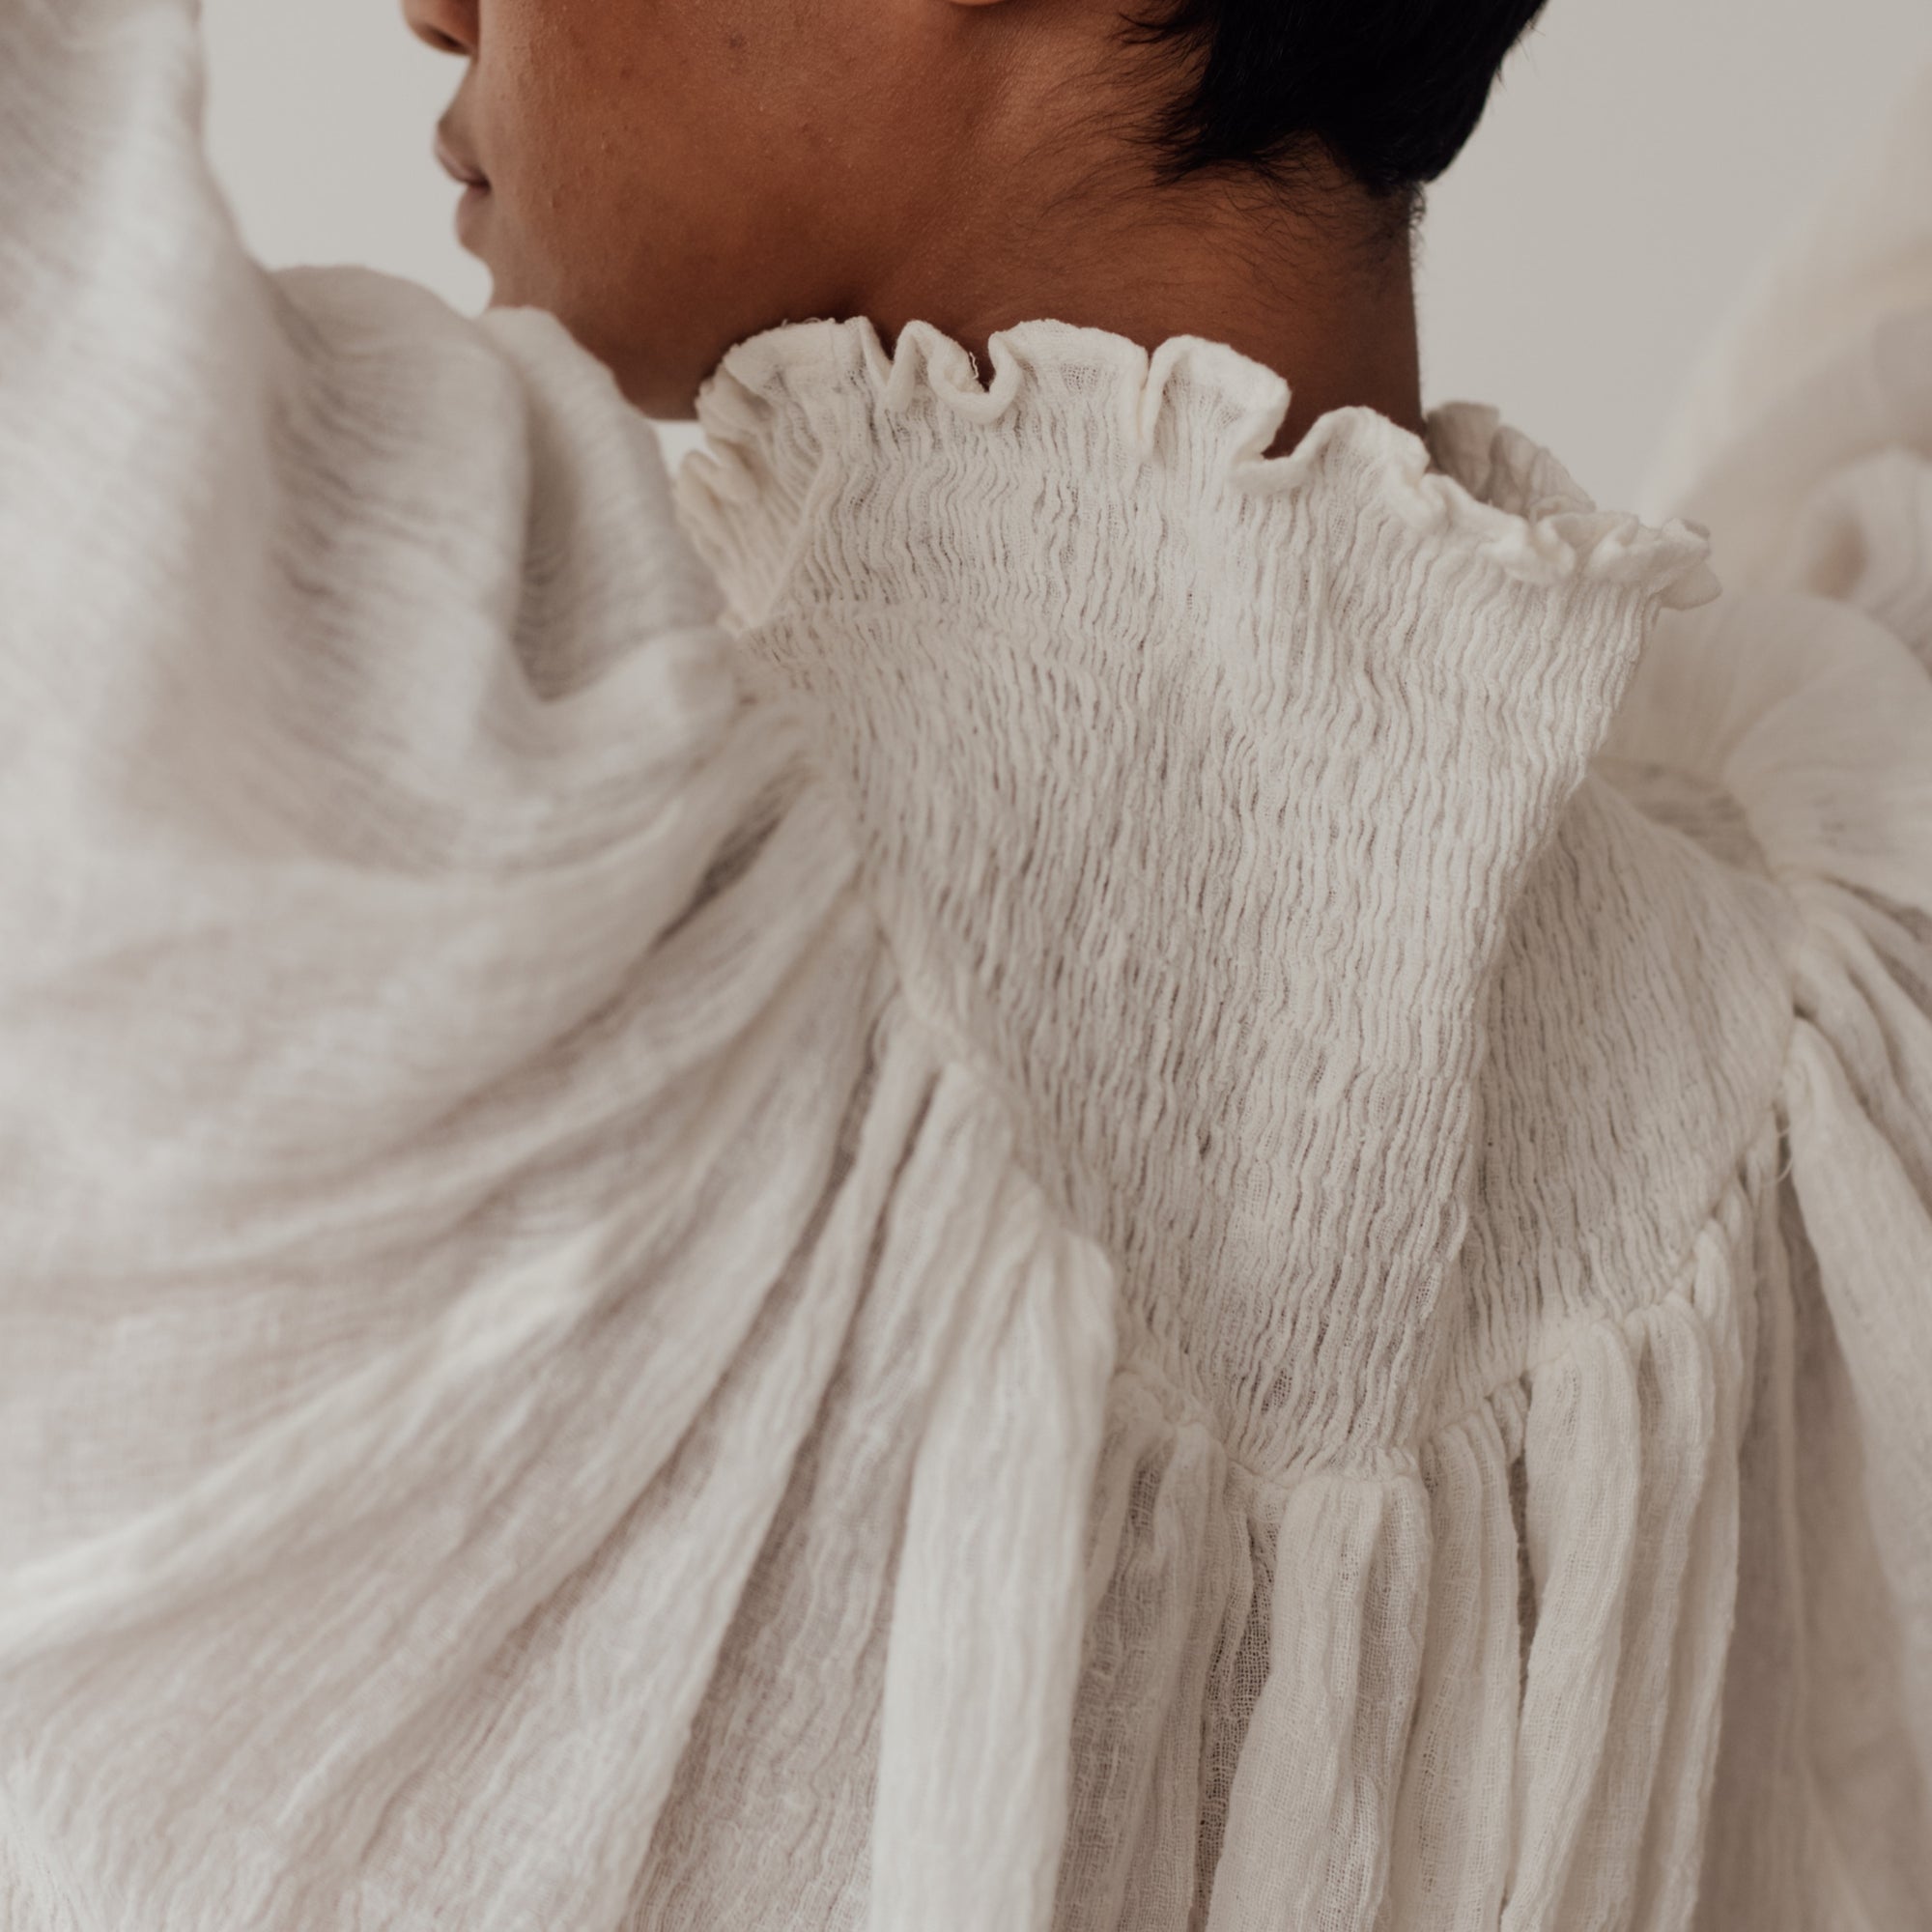 ELEANOR - WHITE Crinkle Linen Collared Maxi Dress